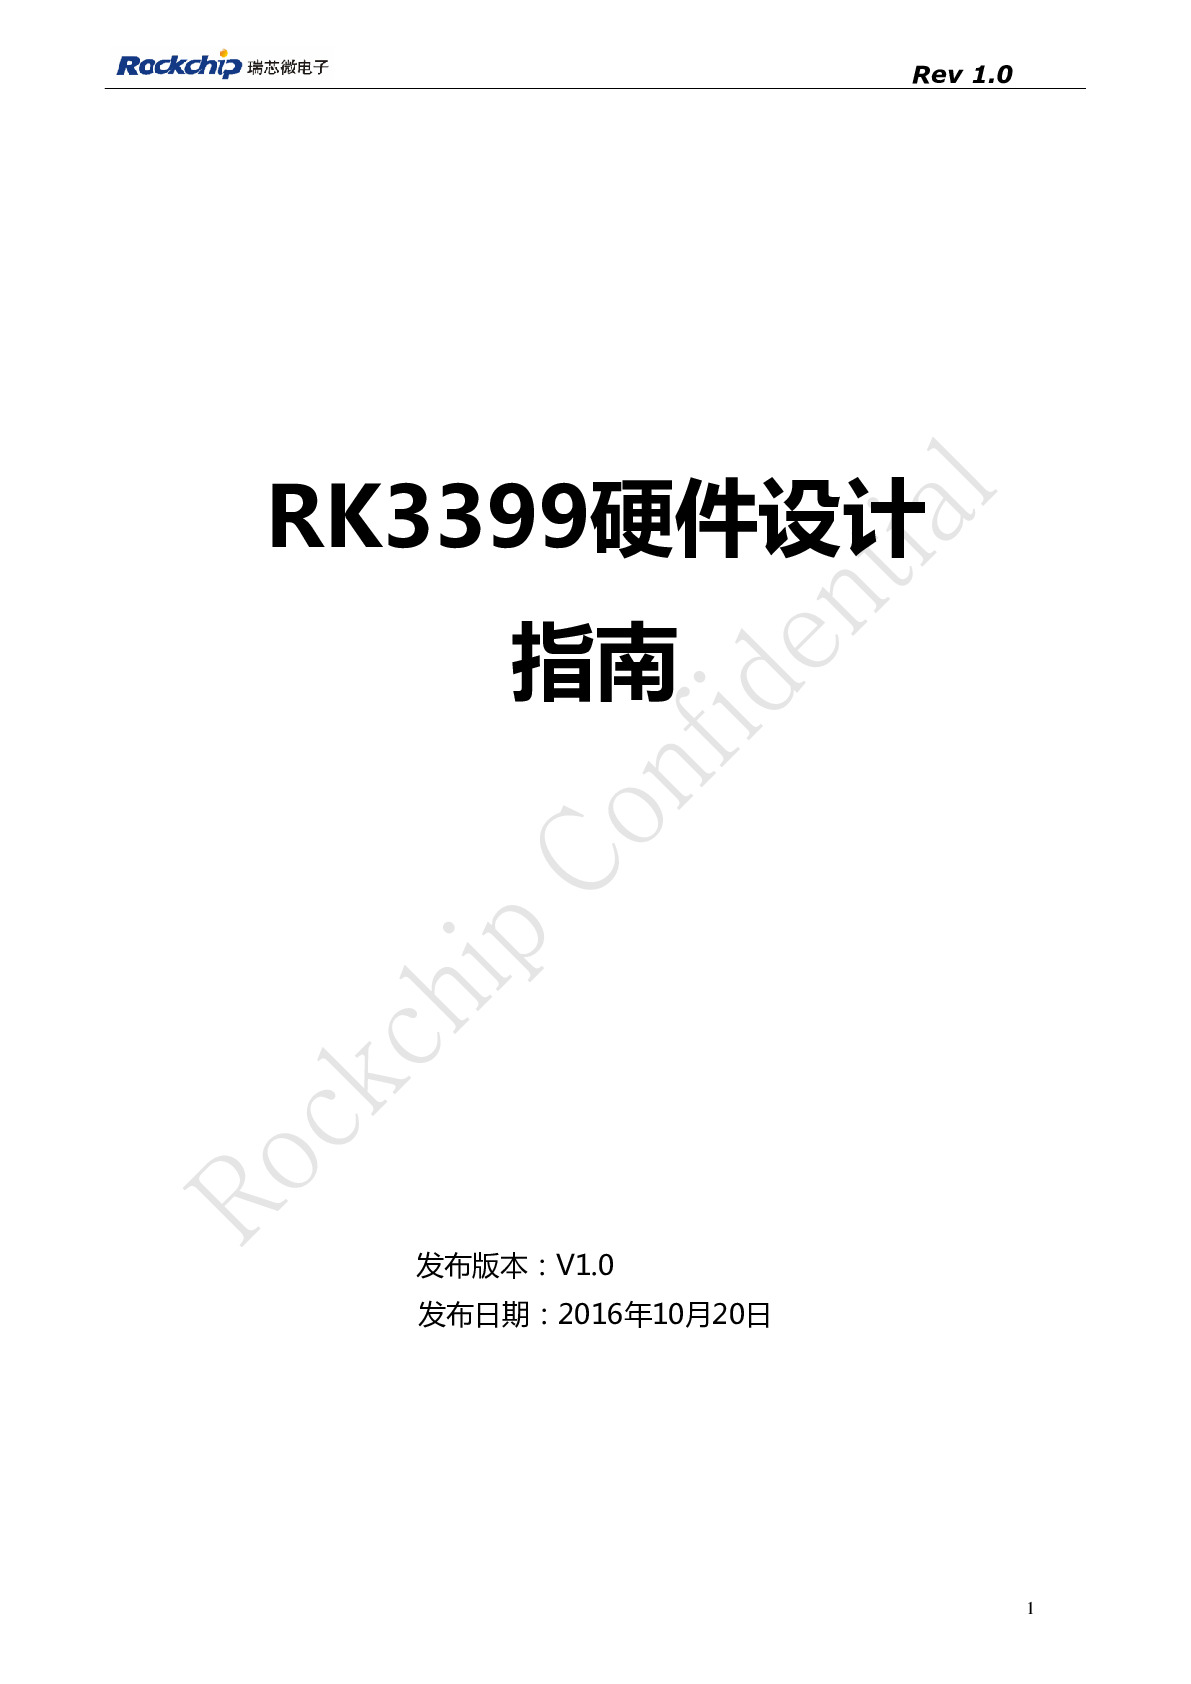 RK3399硬件设计指南